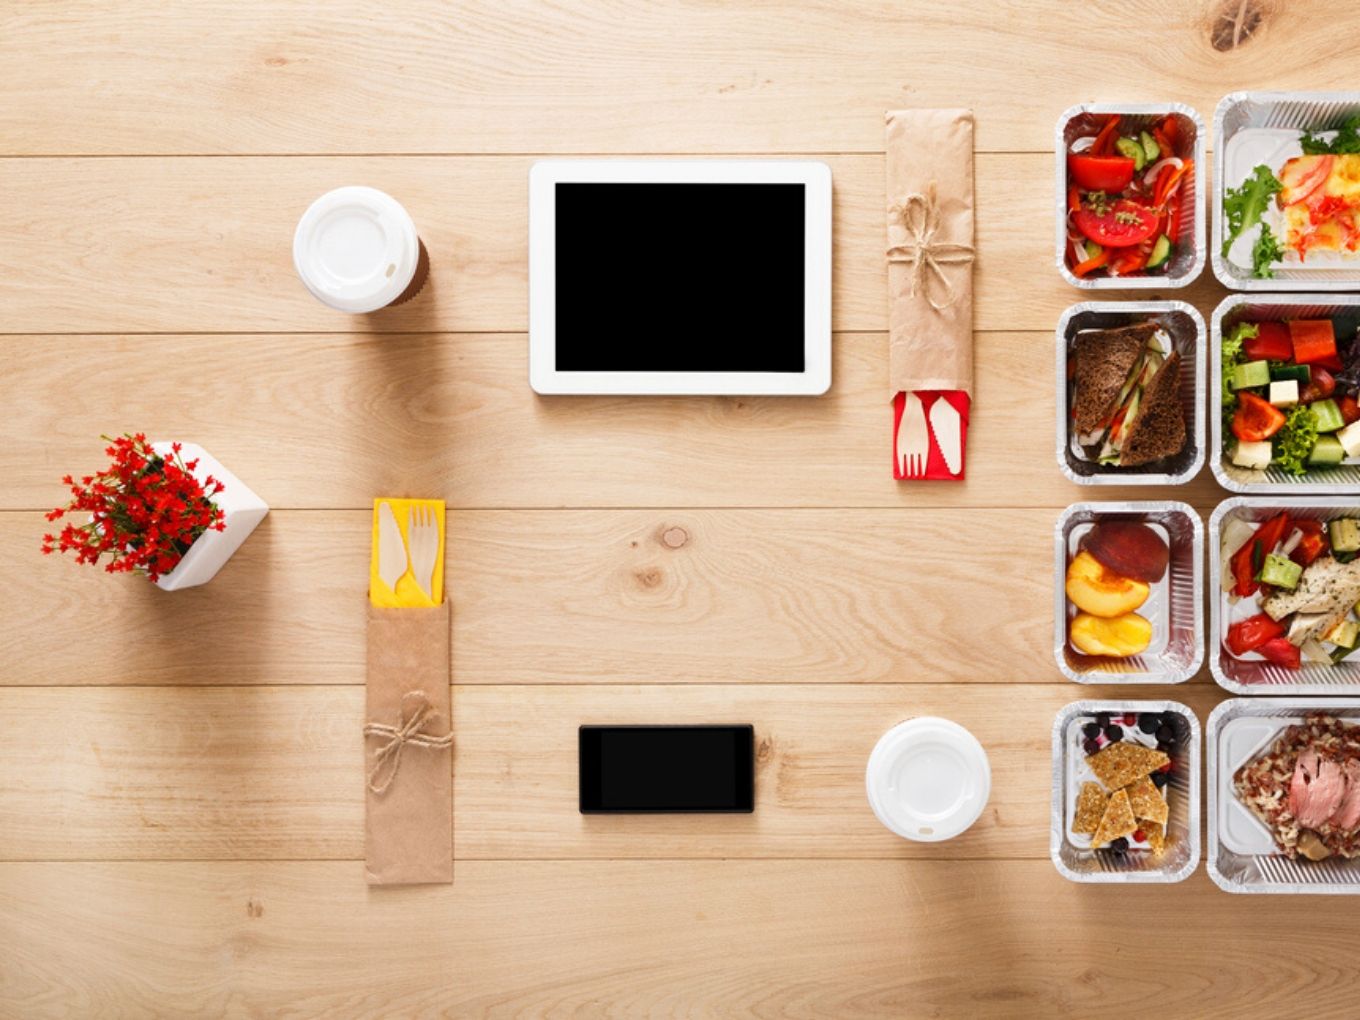 NRAI, Restaurants Take On Zomato, Swiggy With Food Delivery Platform